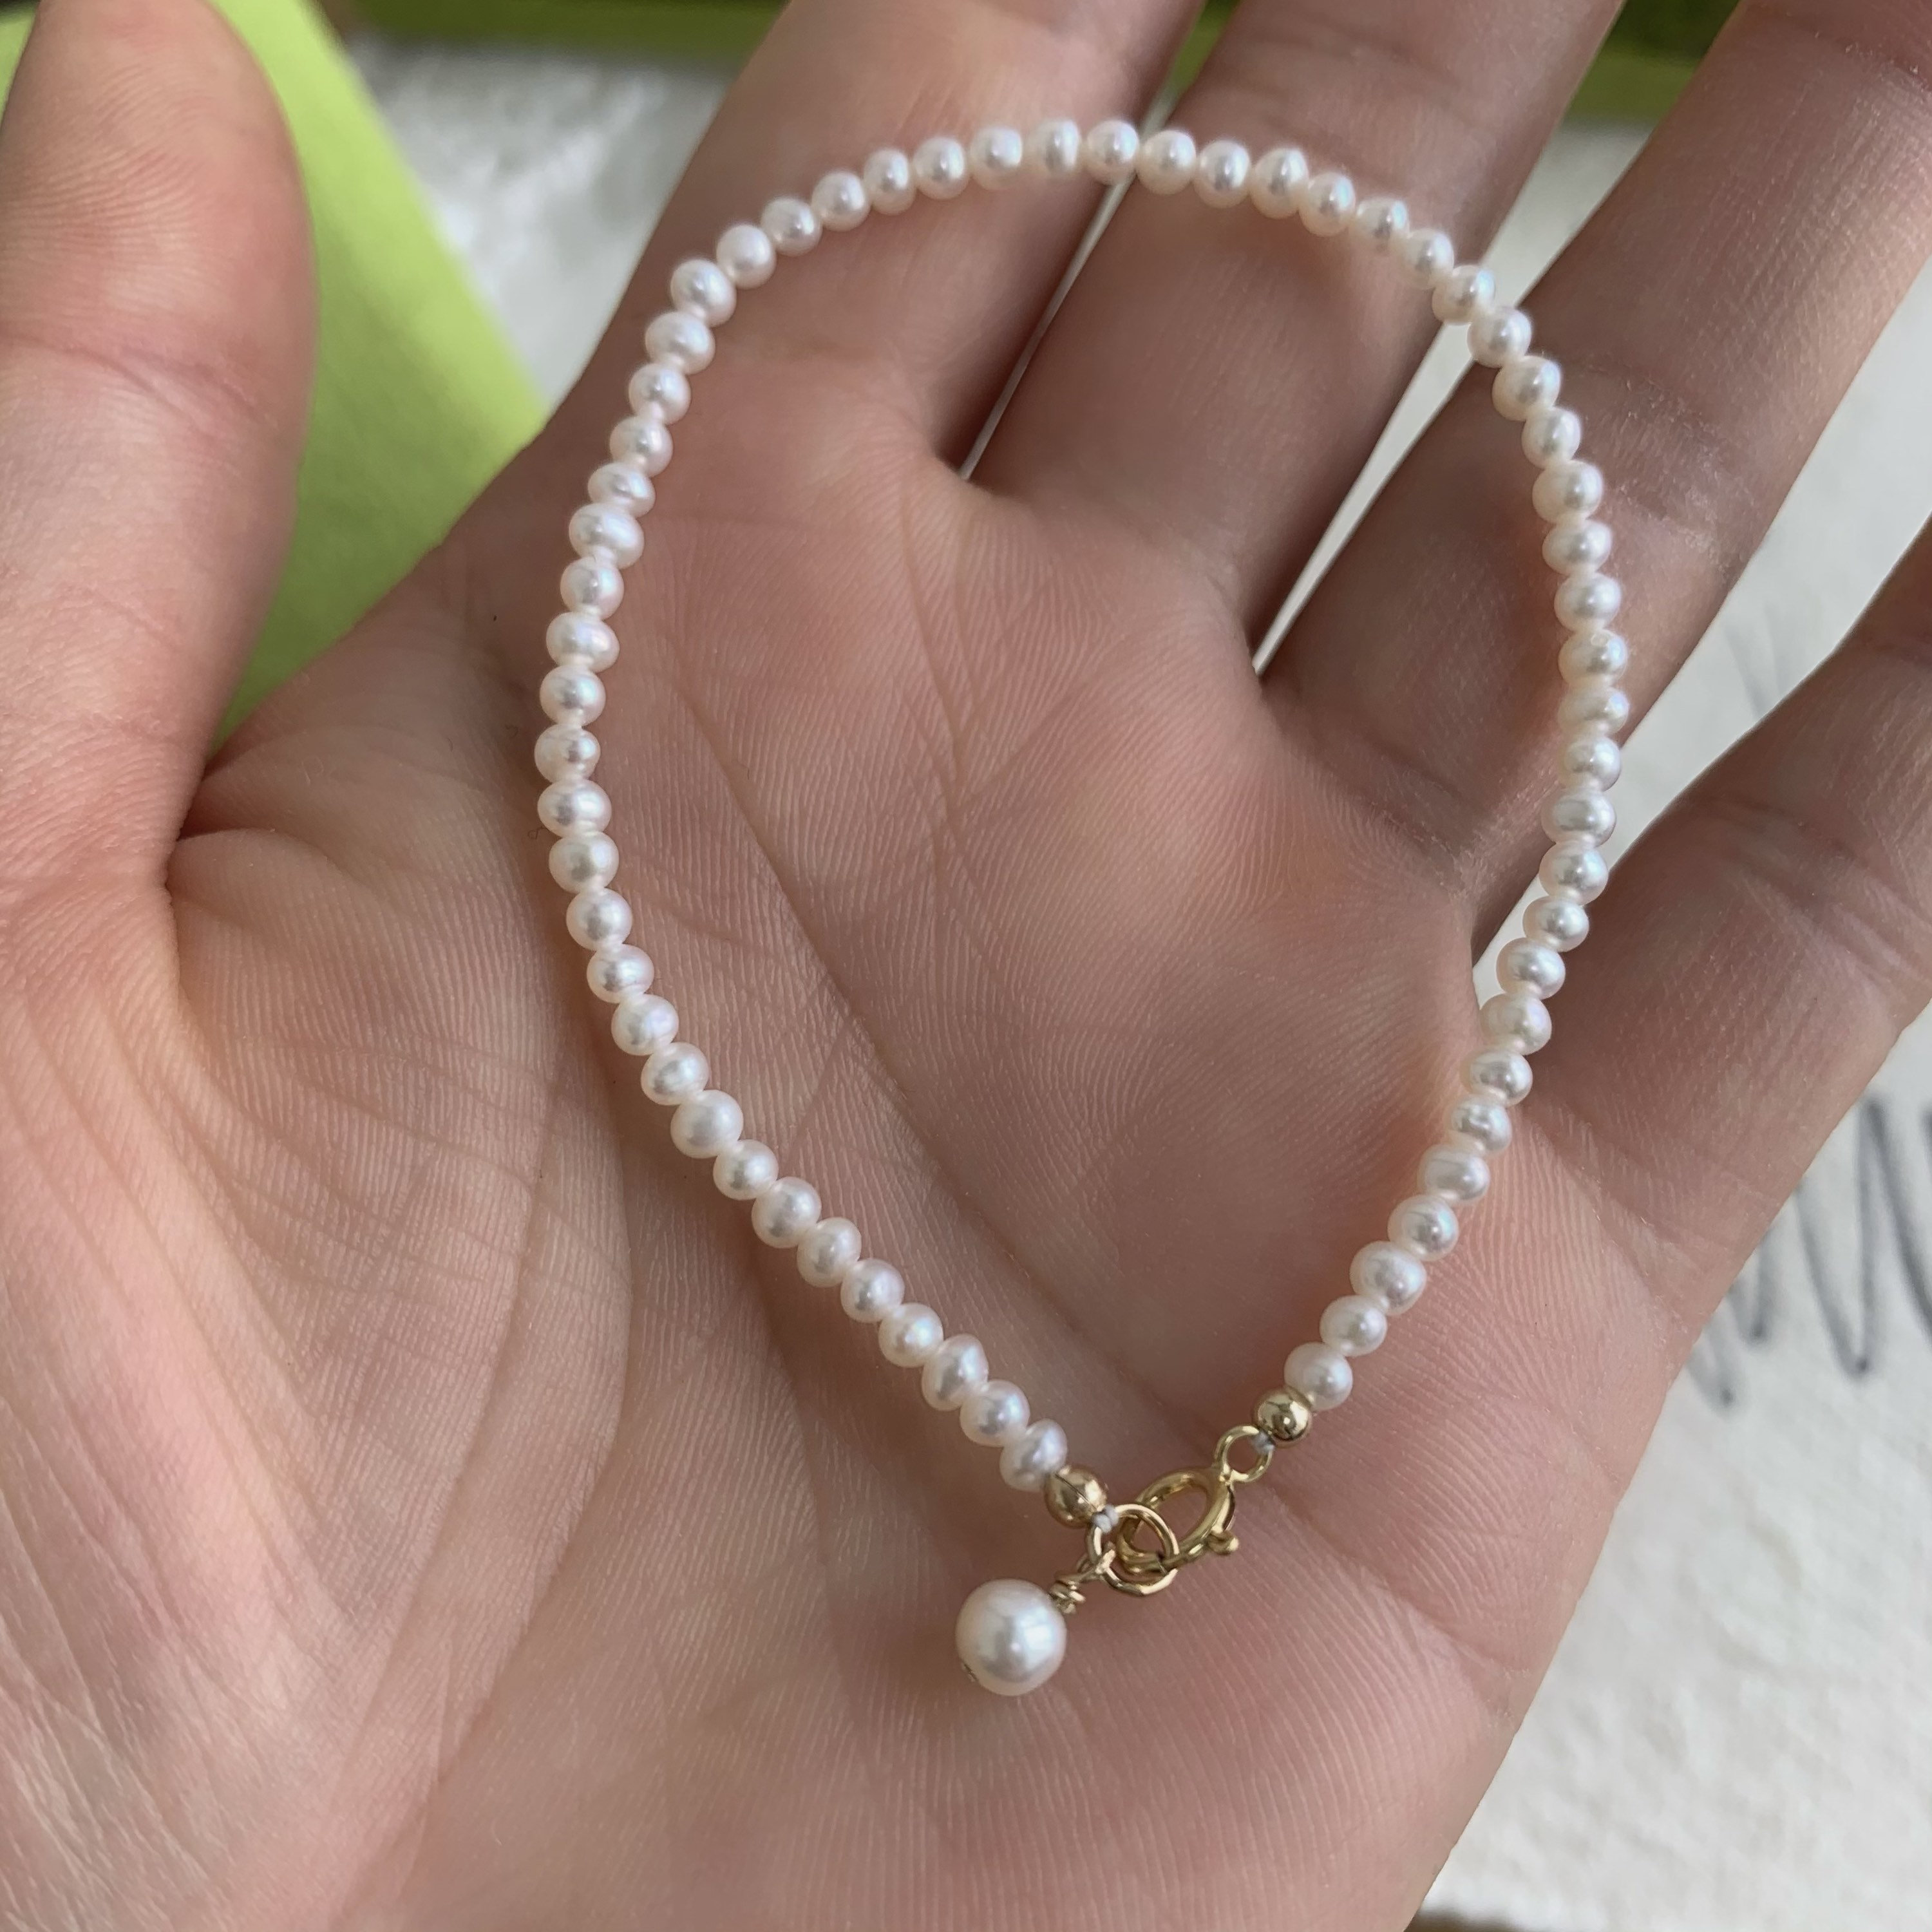 Natural Pearl Bracelet/ Woman Plated Bracelet/ Simple Everyday Bracelet/ Delicate Pearl Bracelet/ Three Pearl Past Present and Future/Tiny Sieraden Armbanden Handkettingen 